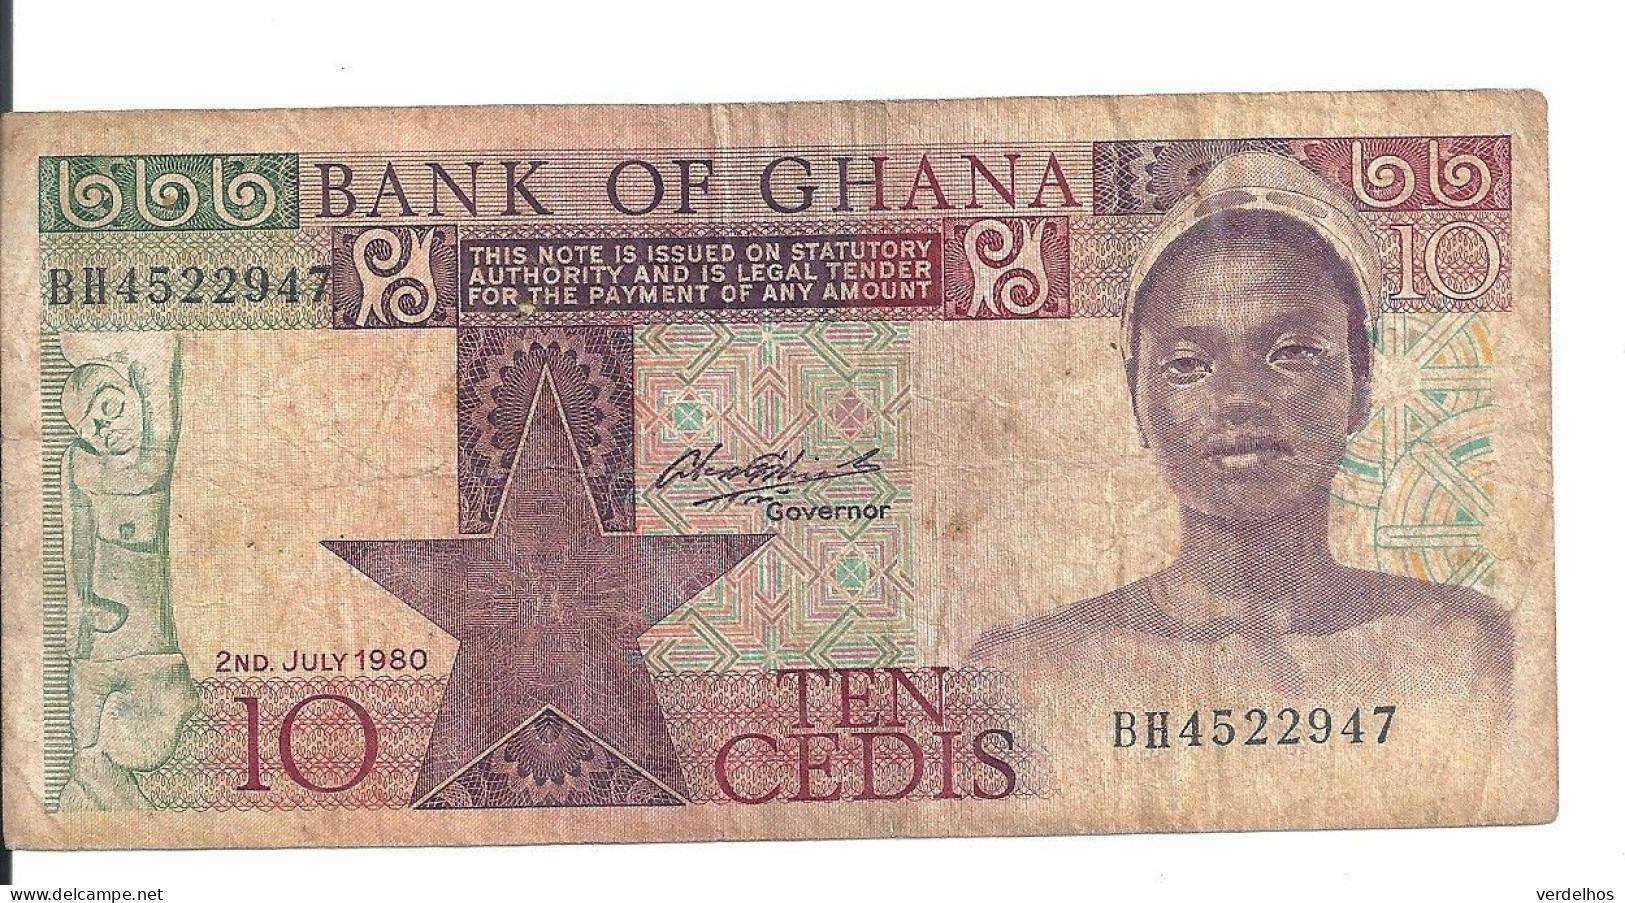 GHANA 10 CEDIS 1980 VG+ P 20 B - Ghana